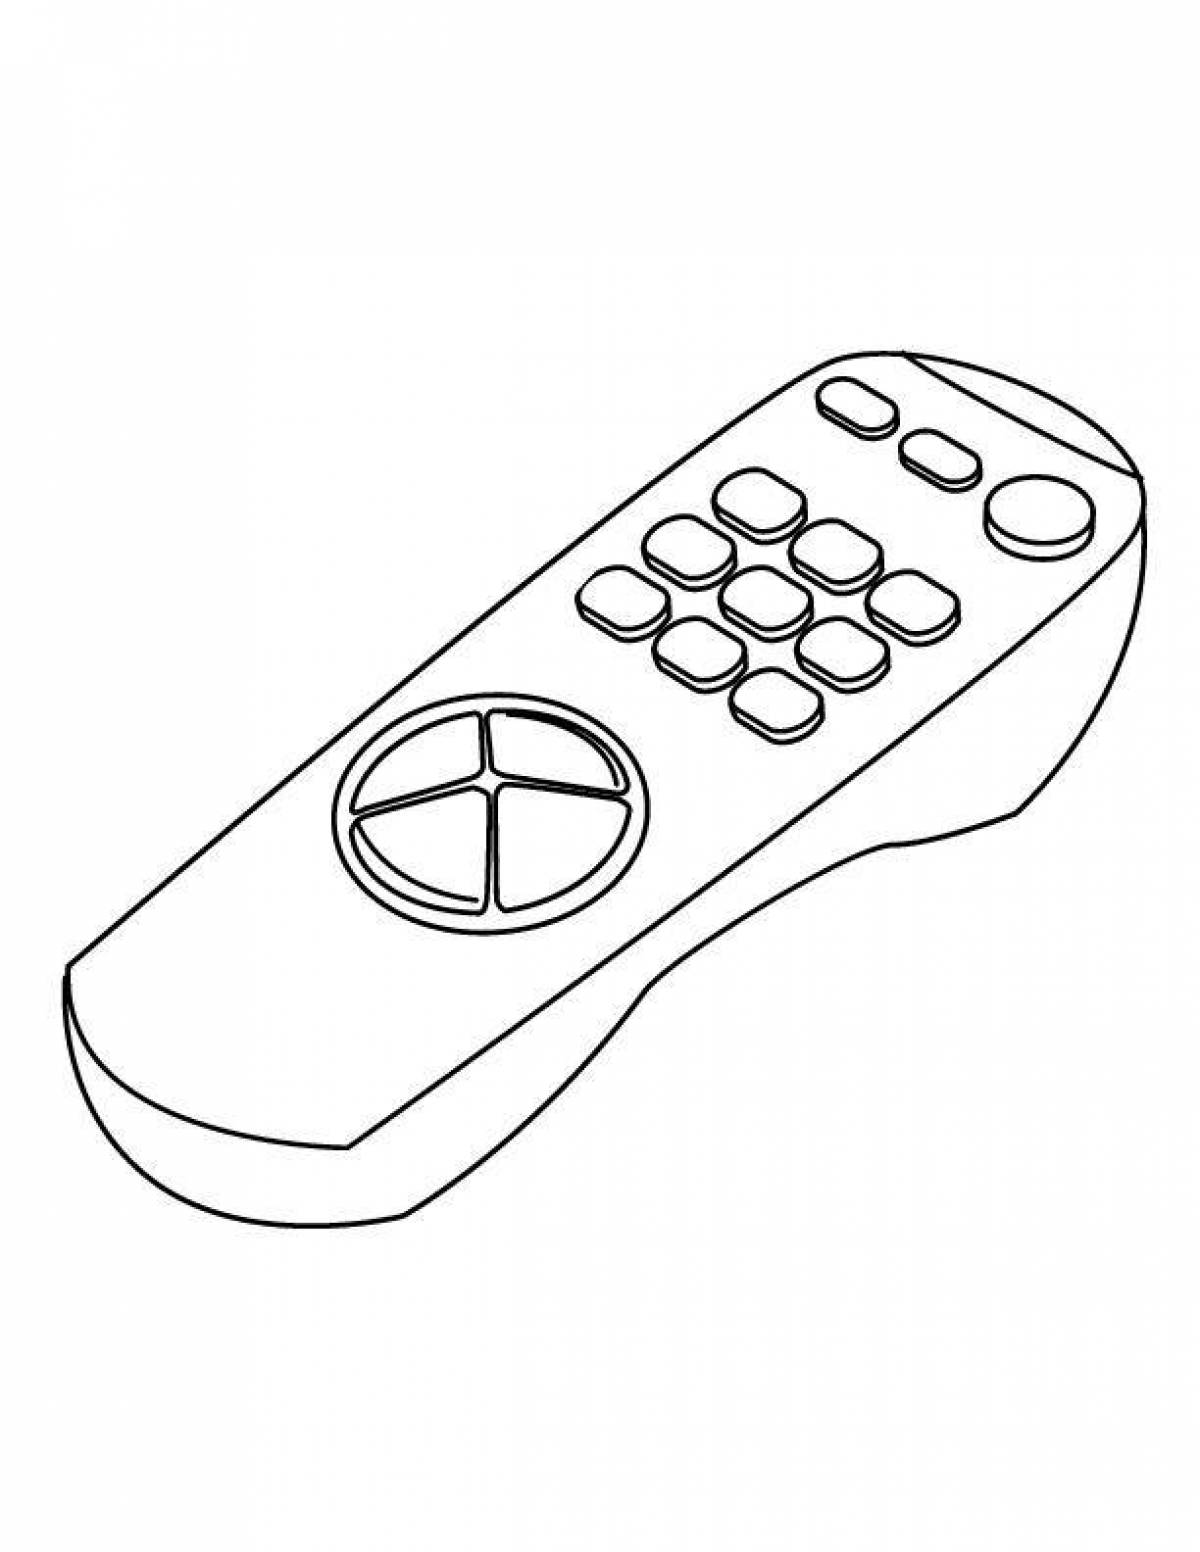 Coloring funny remote control